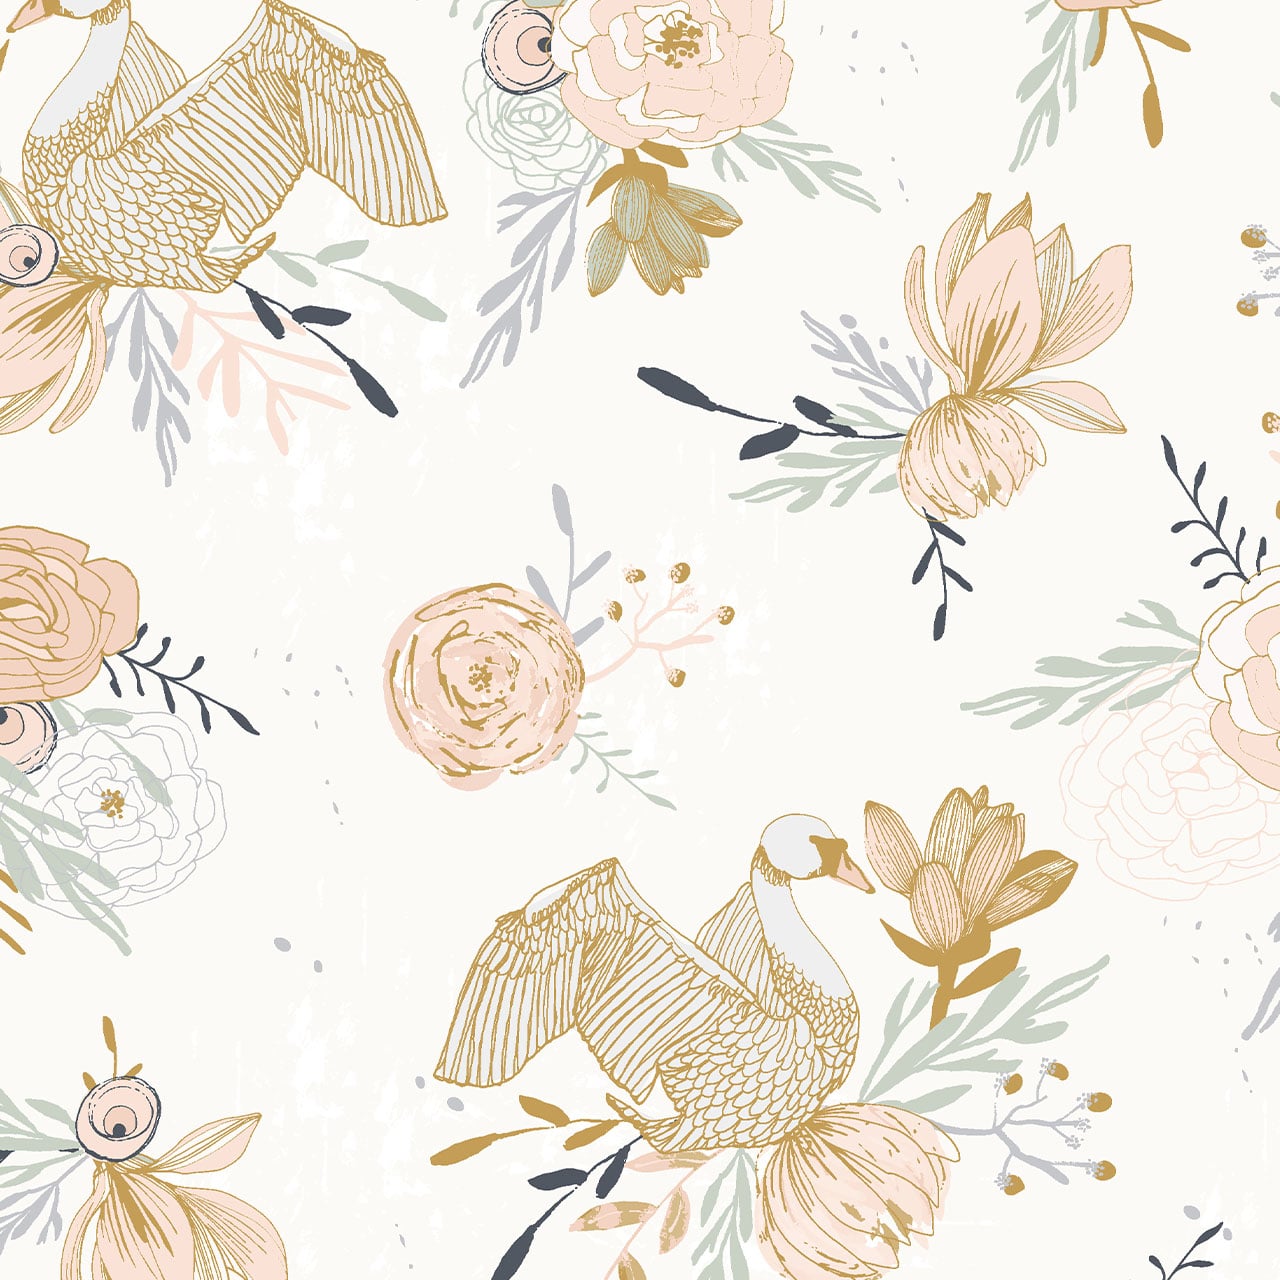 Herons on peach cotton fabric - 'New Beginnings' by Dashwood Studio